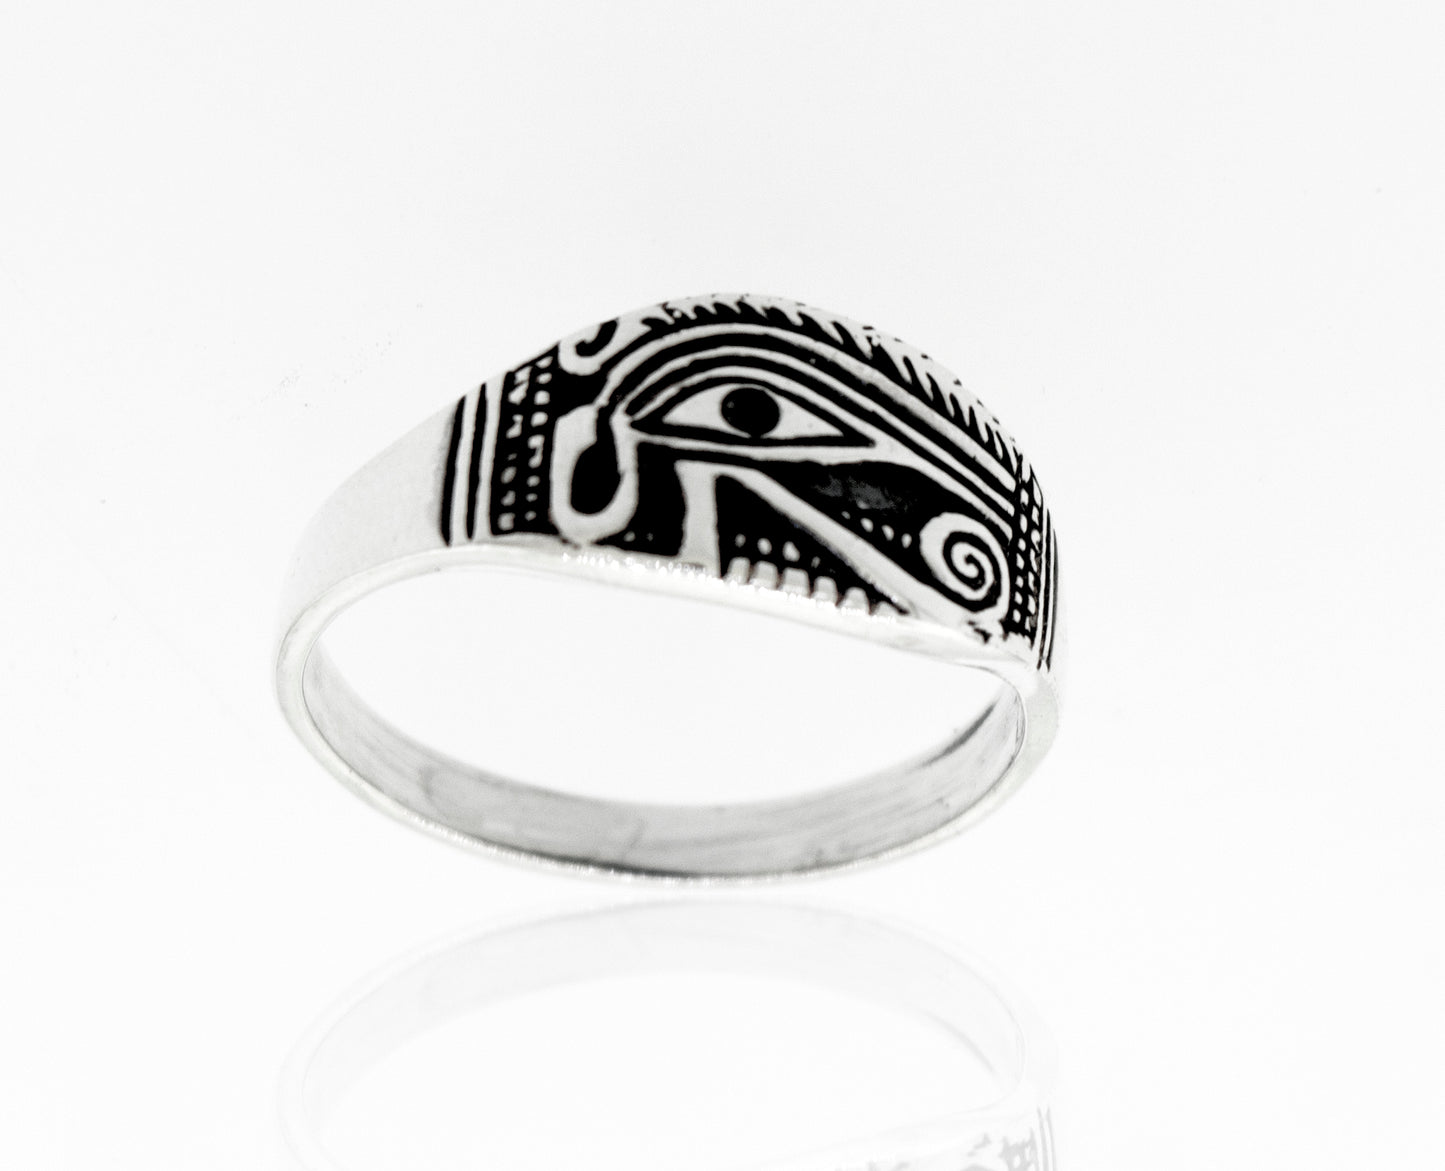 A captivating Eye of Horus ring adorned with a mesmerizing eye design.